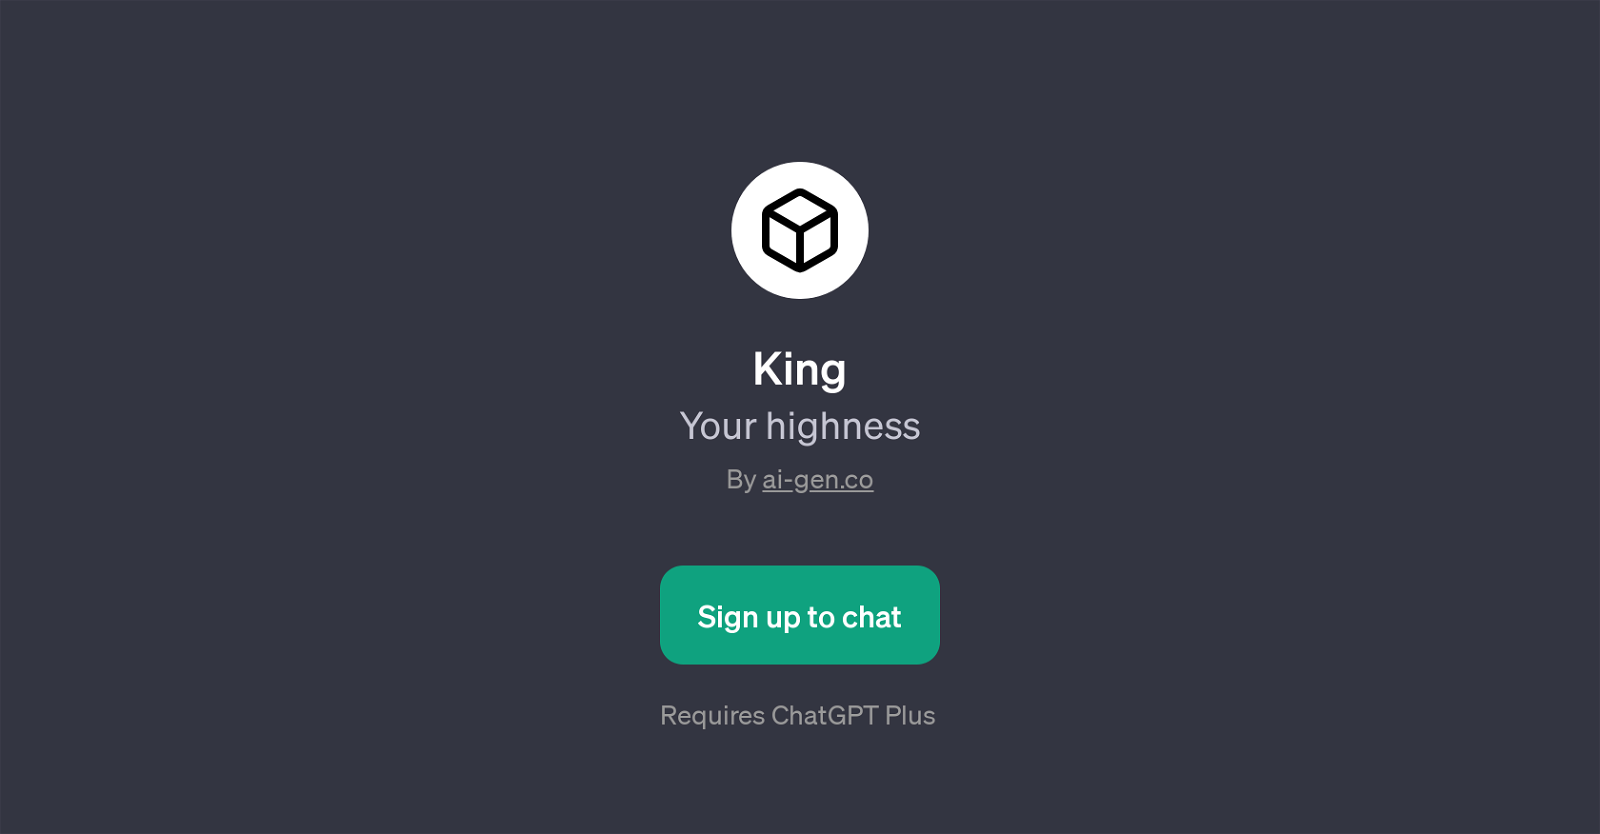 King website